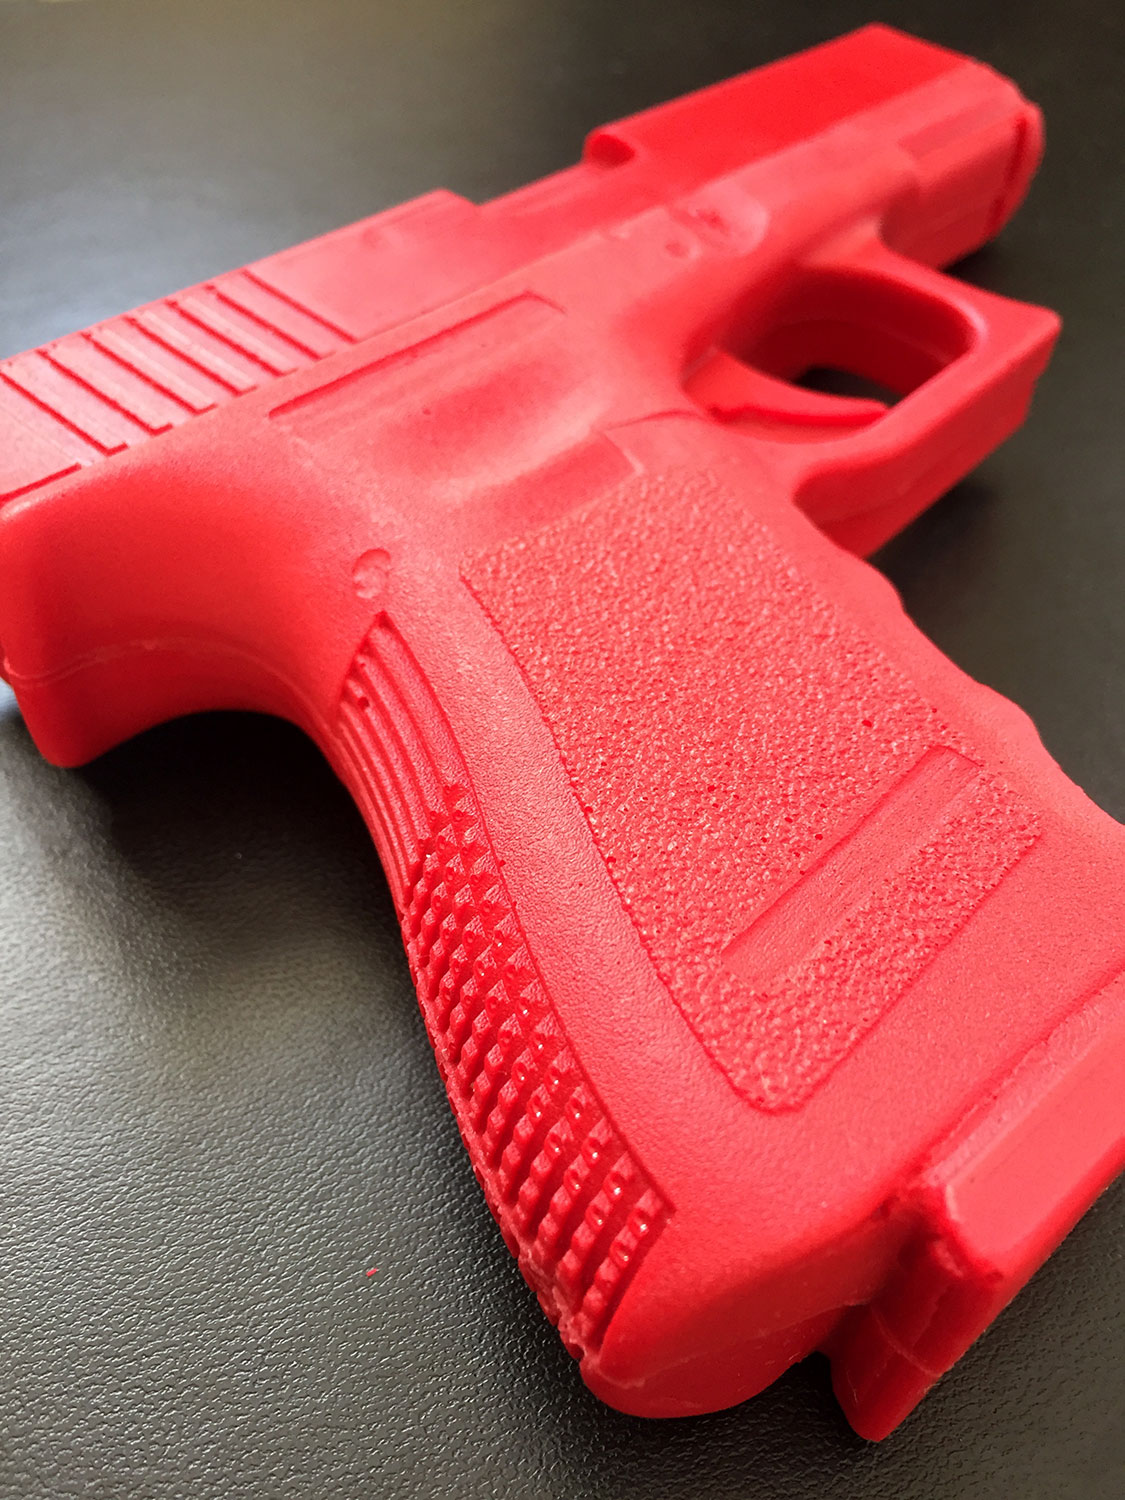 red-gun-glock-19